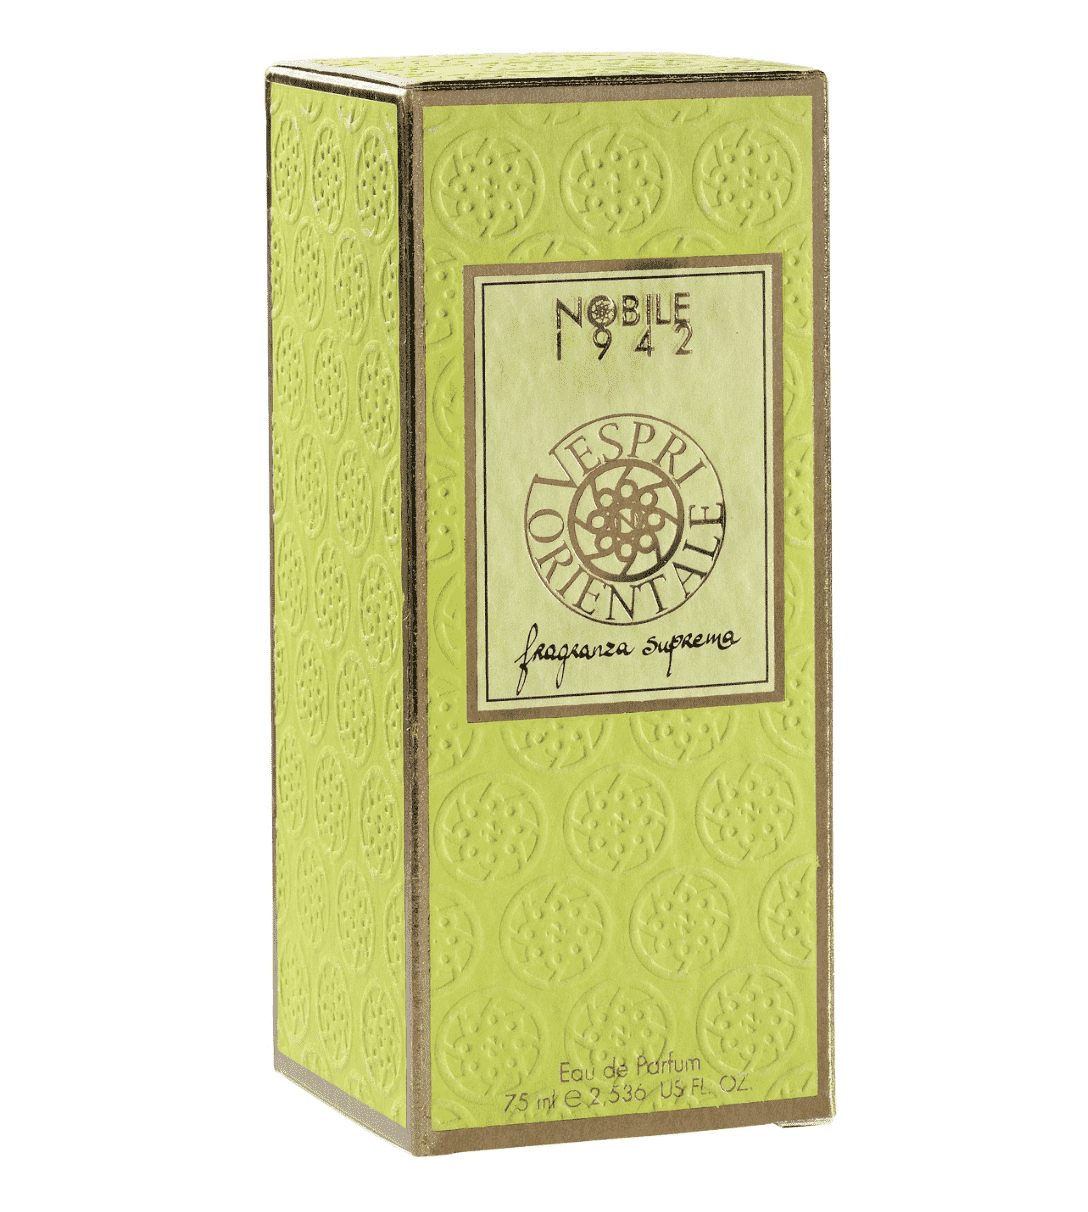  Vespri Orientale Fine Perfume Nobile 1942 Perfumarie